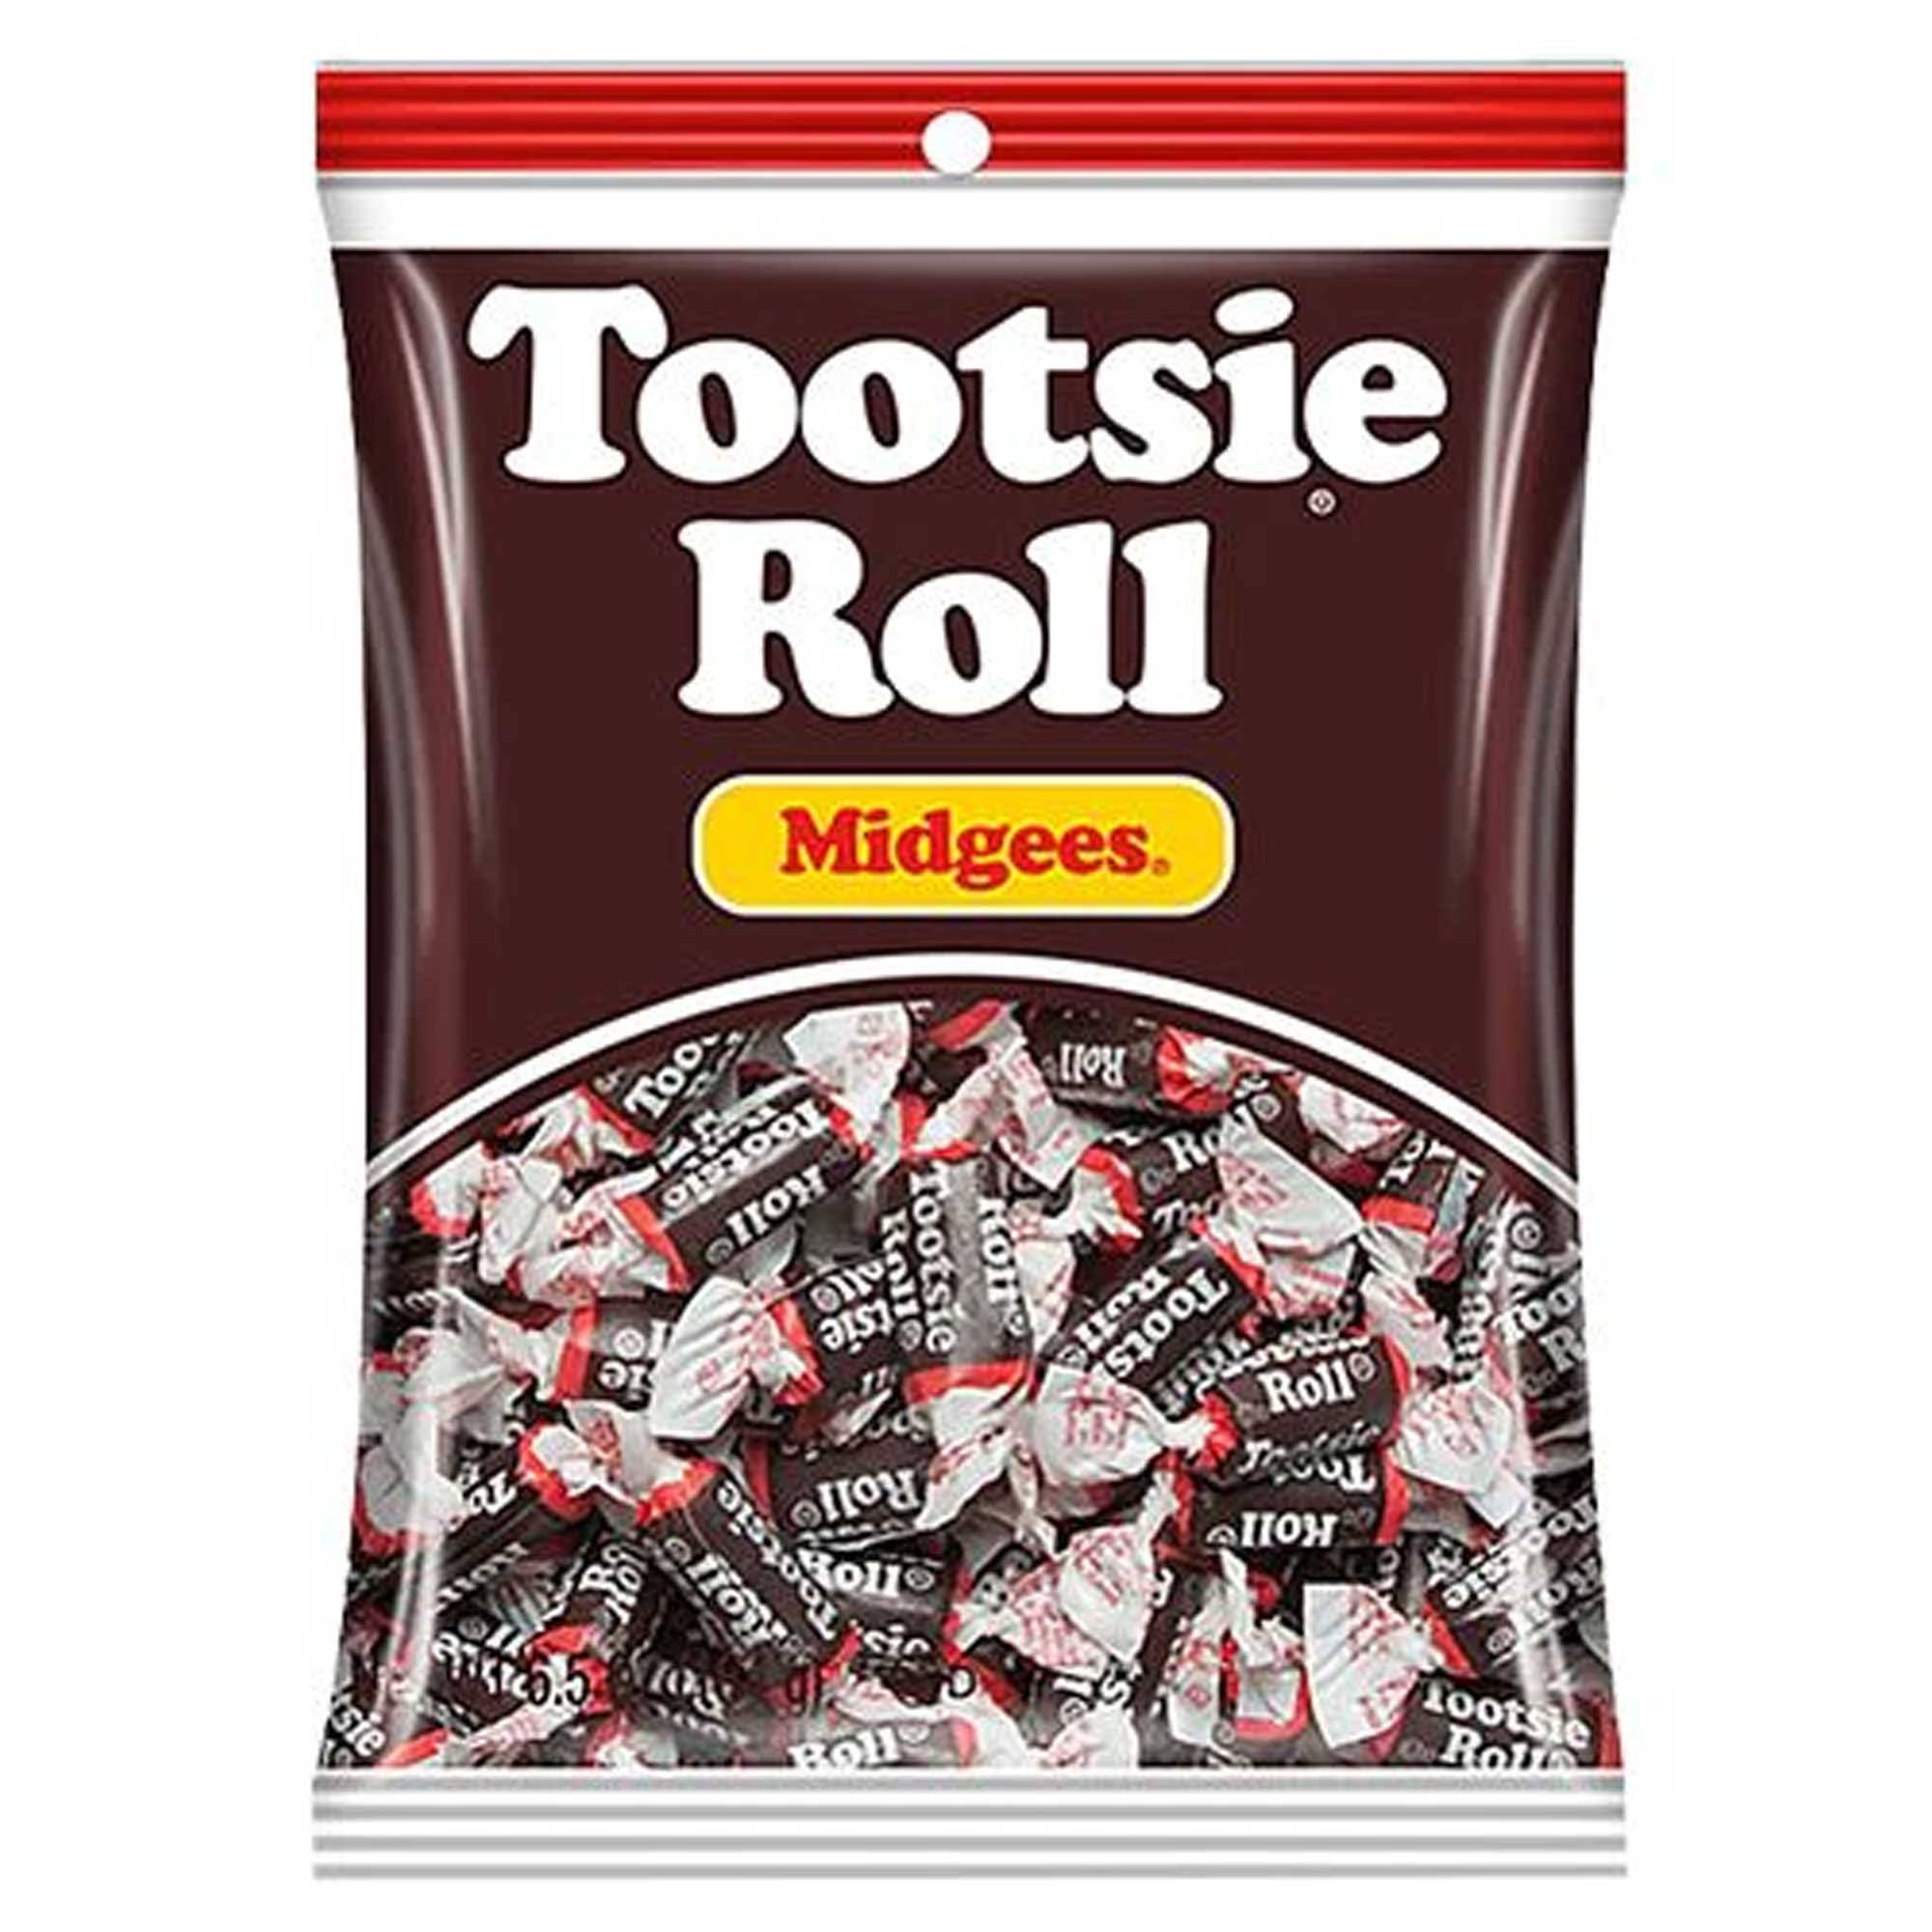 Tootsie Roll Midgees - 184g